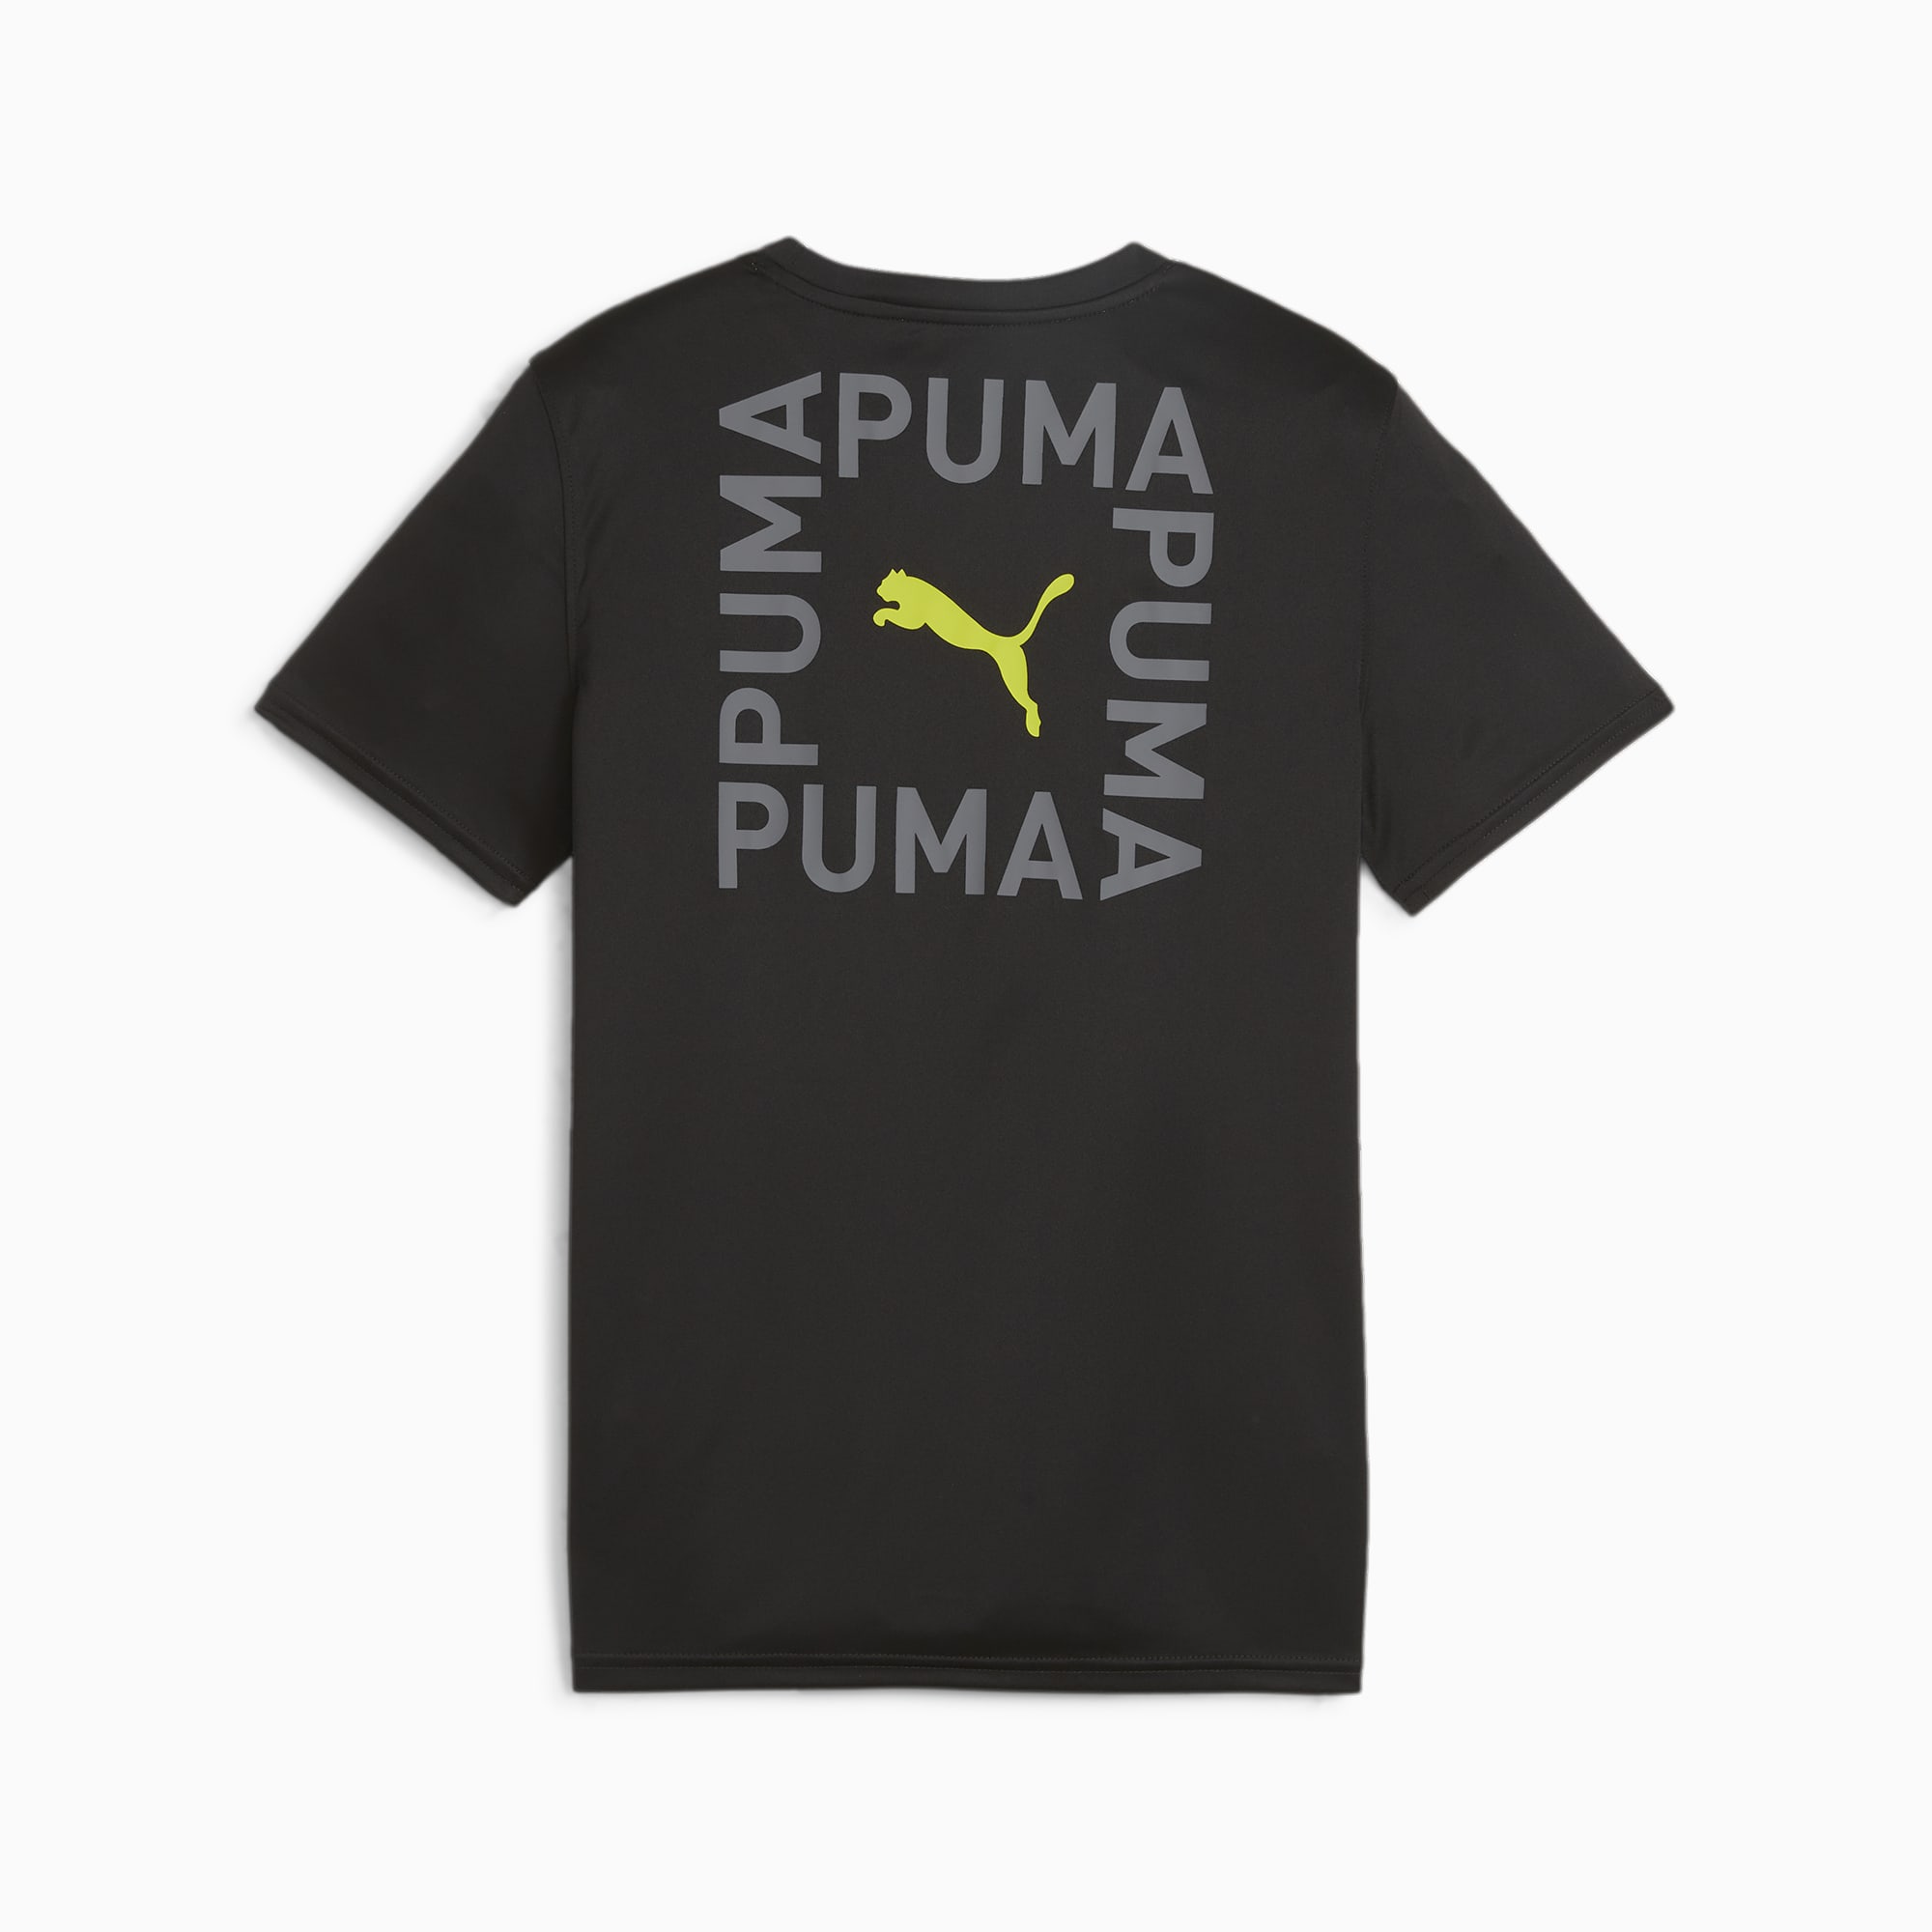 PUMA Fit Youth T-Shirt, Black, Size 116, Clothing